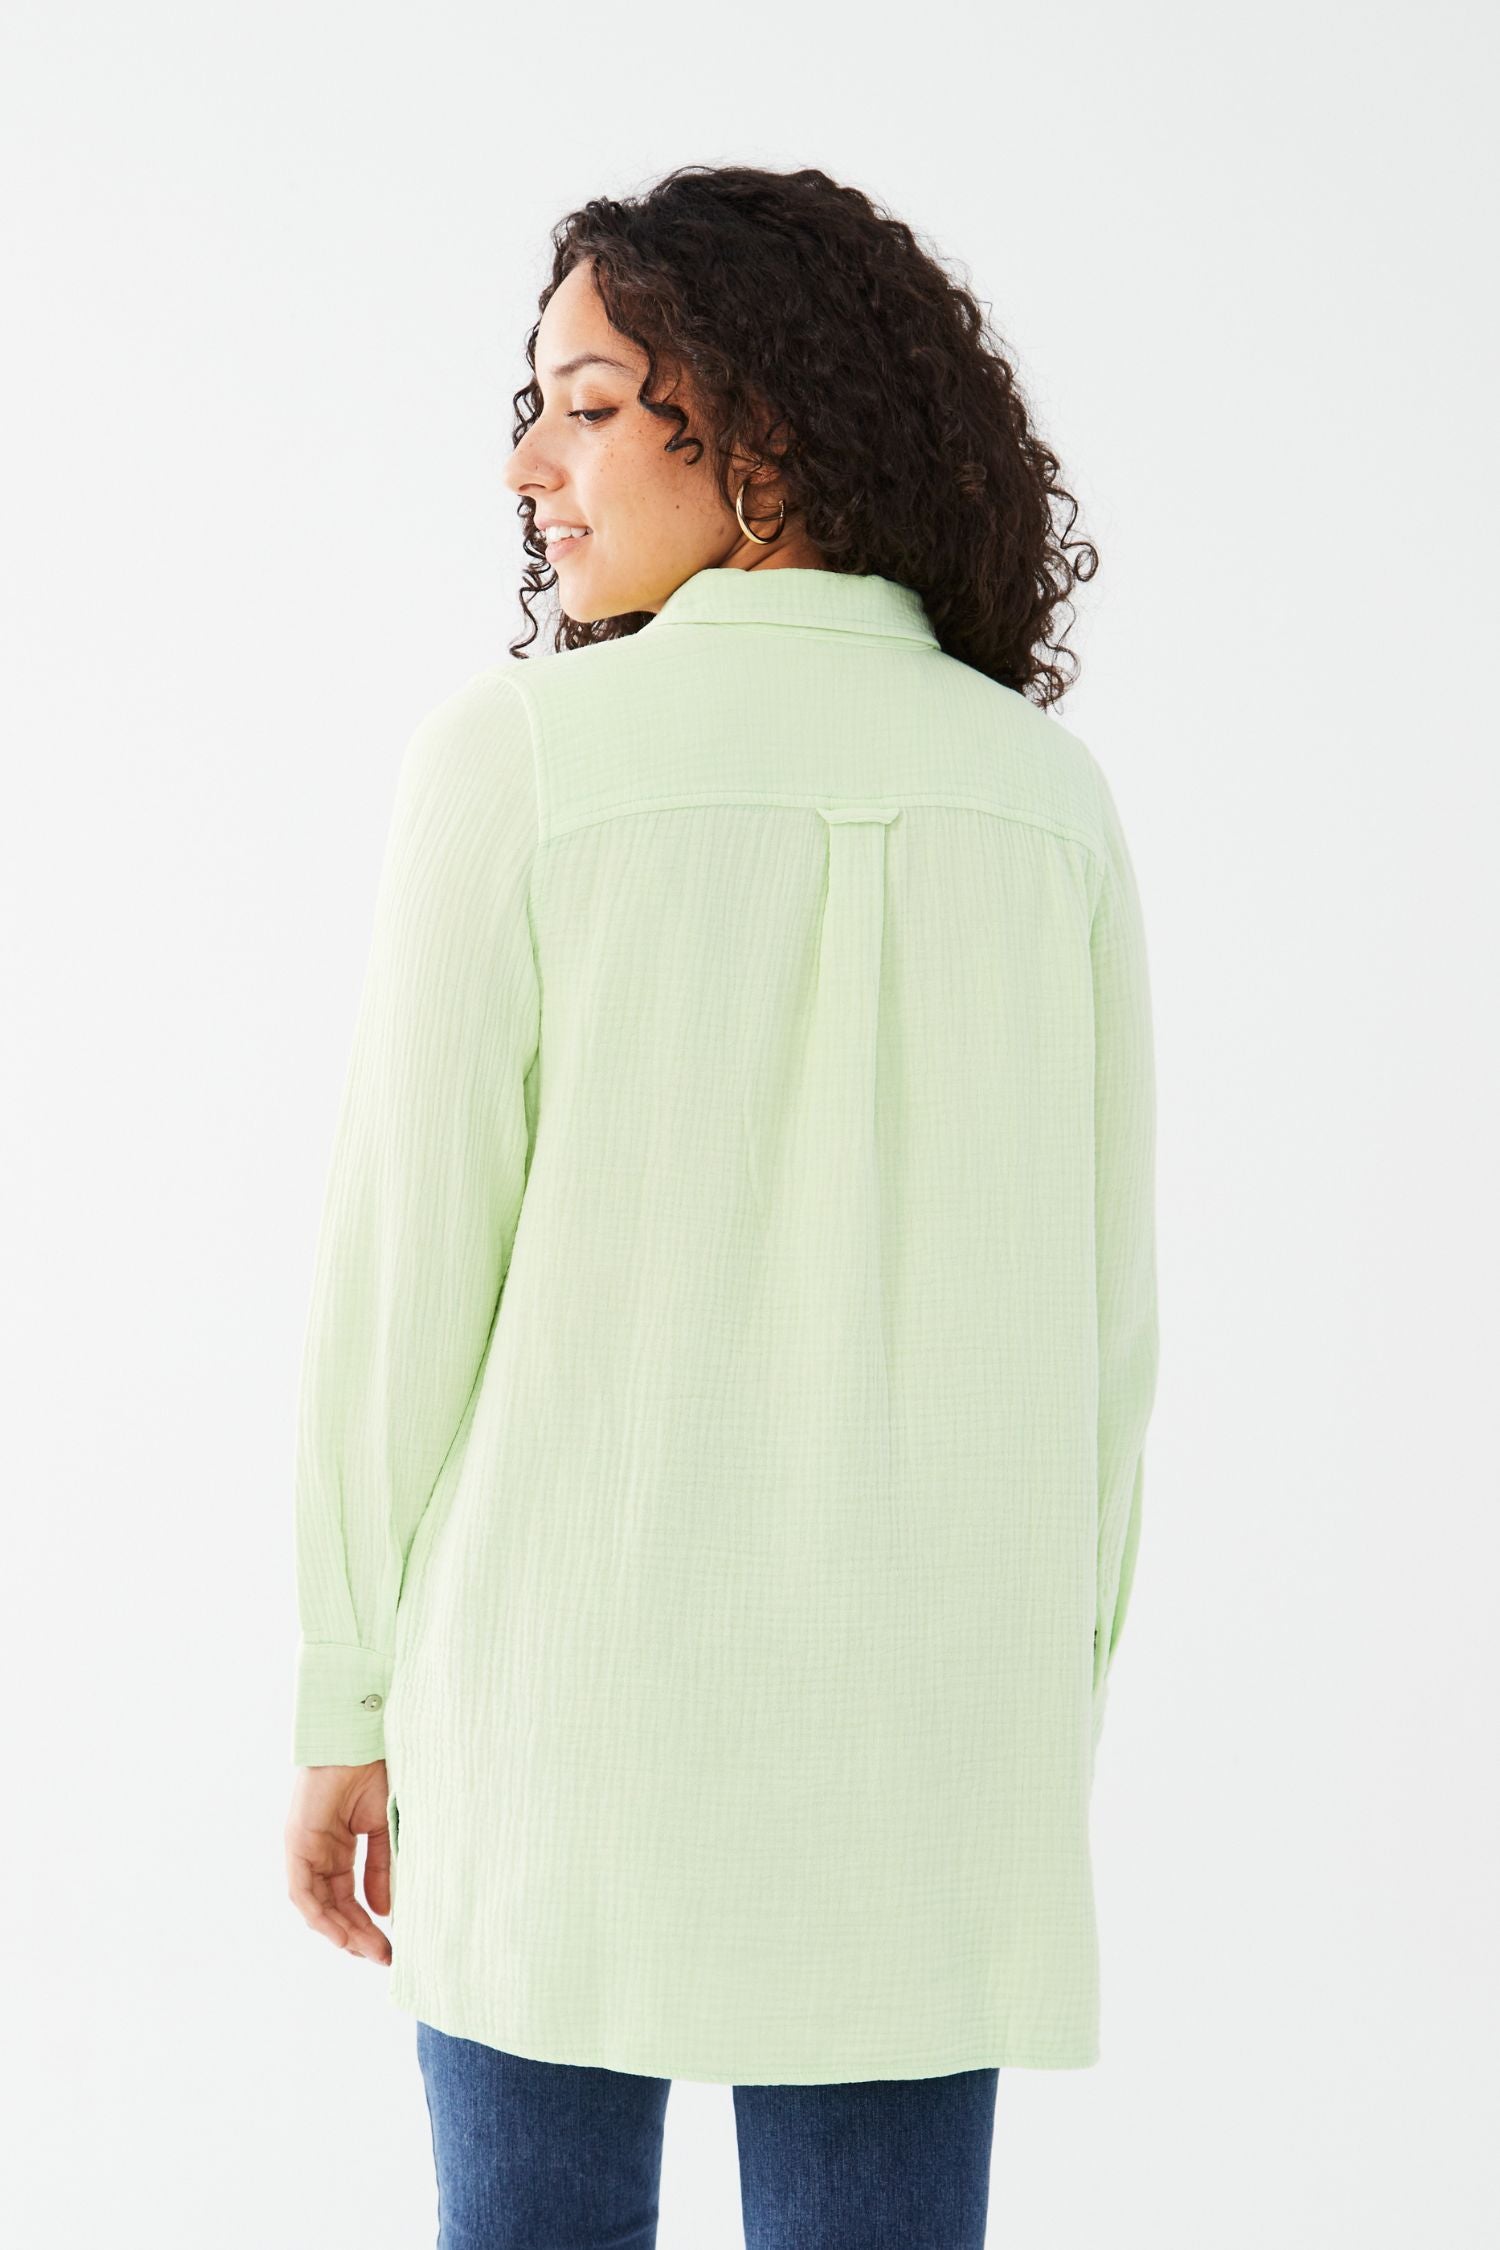 FDJ Long Sleeve Crinkle Cotton Tunic - Style 7122975F, back, green